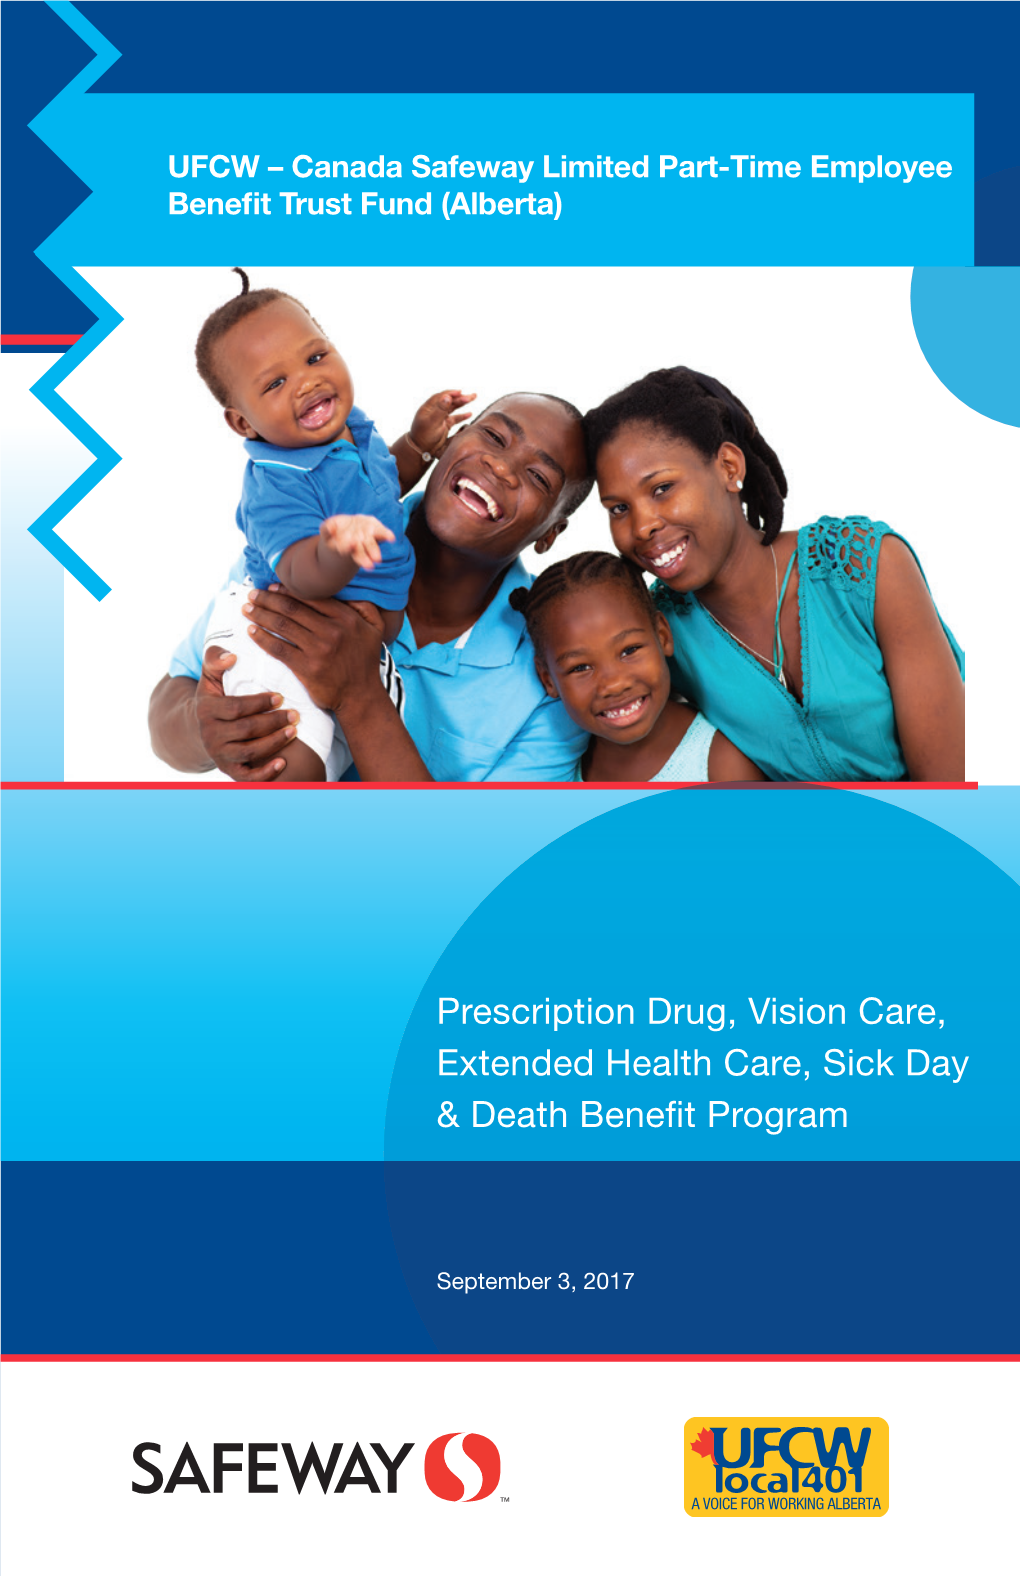 Prescription Drug, Vision Care, Extended Health Care, Sick Day & Death Benefit Program